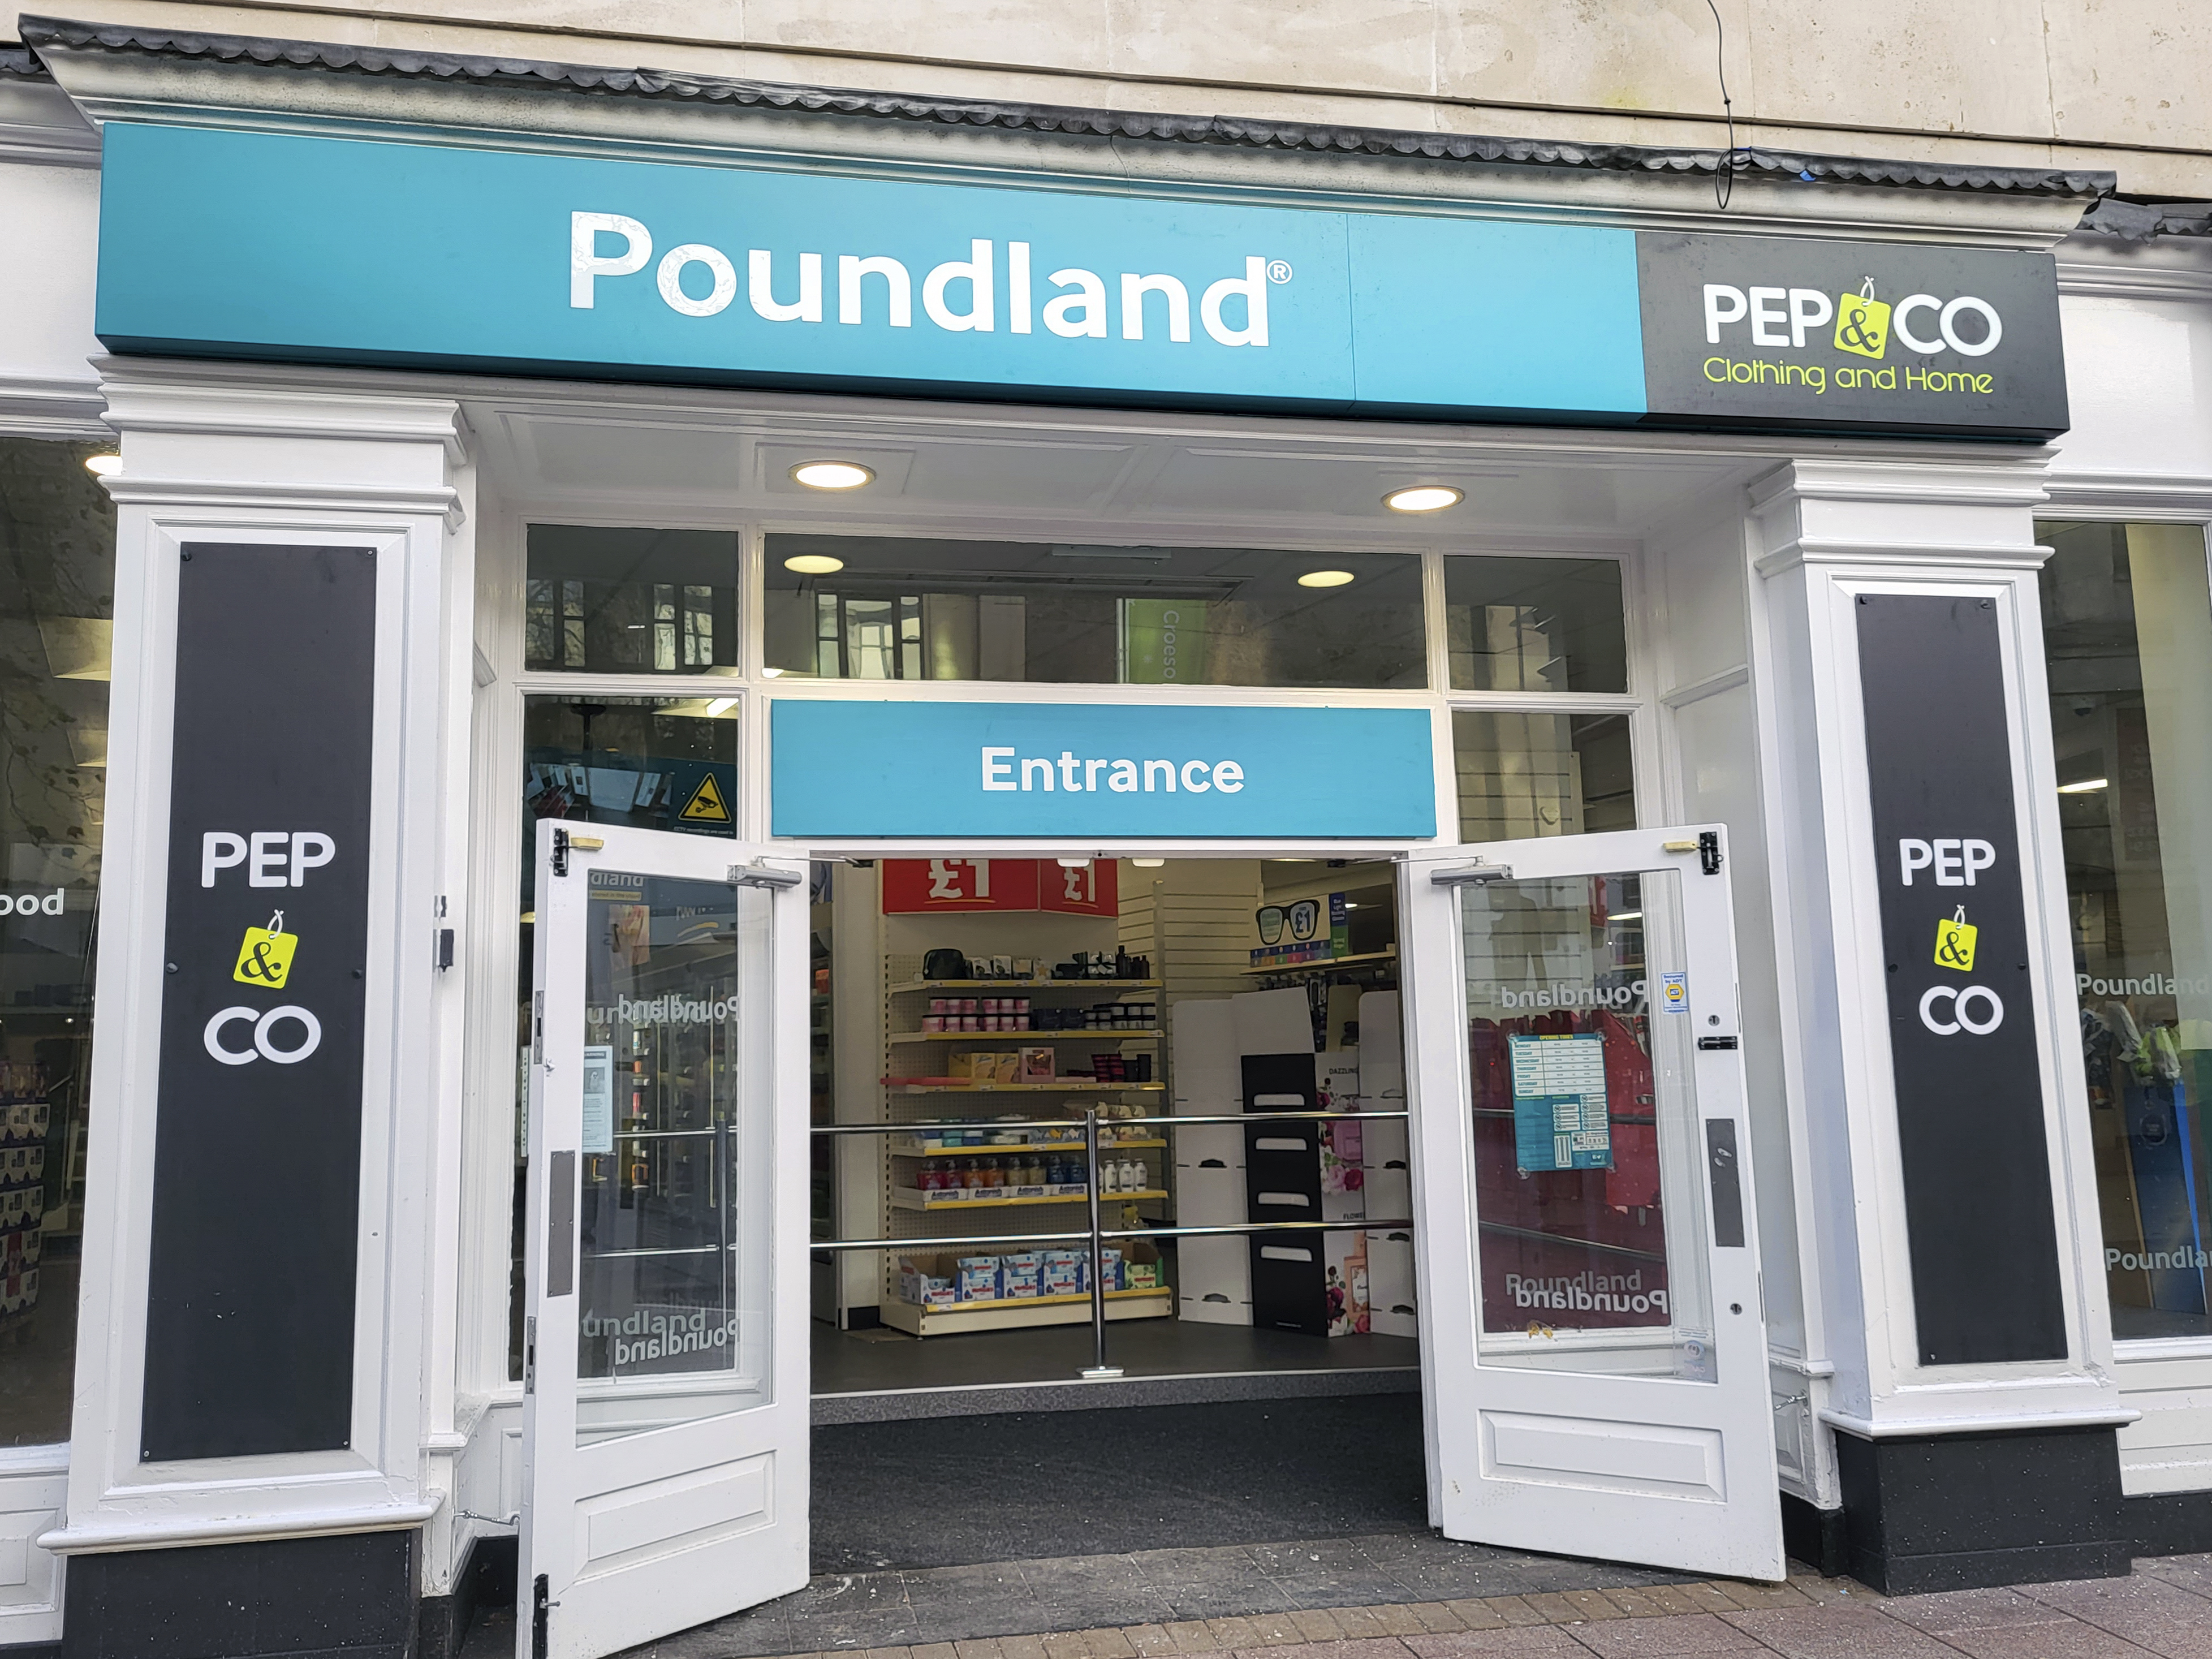 Poundland has around 850 stores across the UK